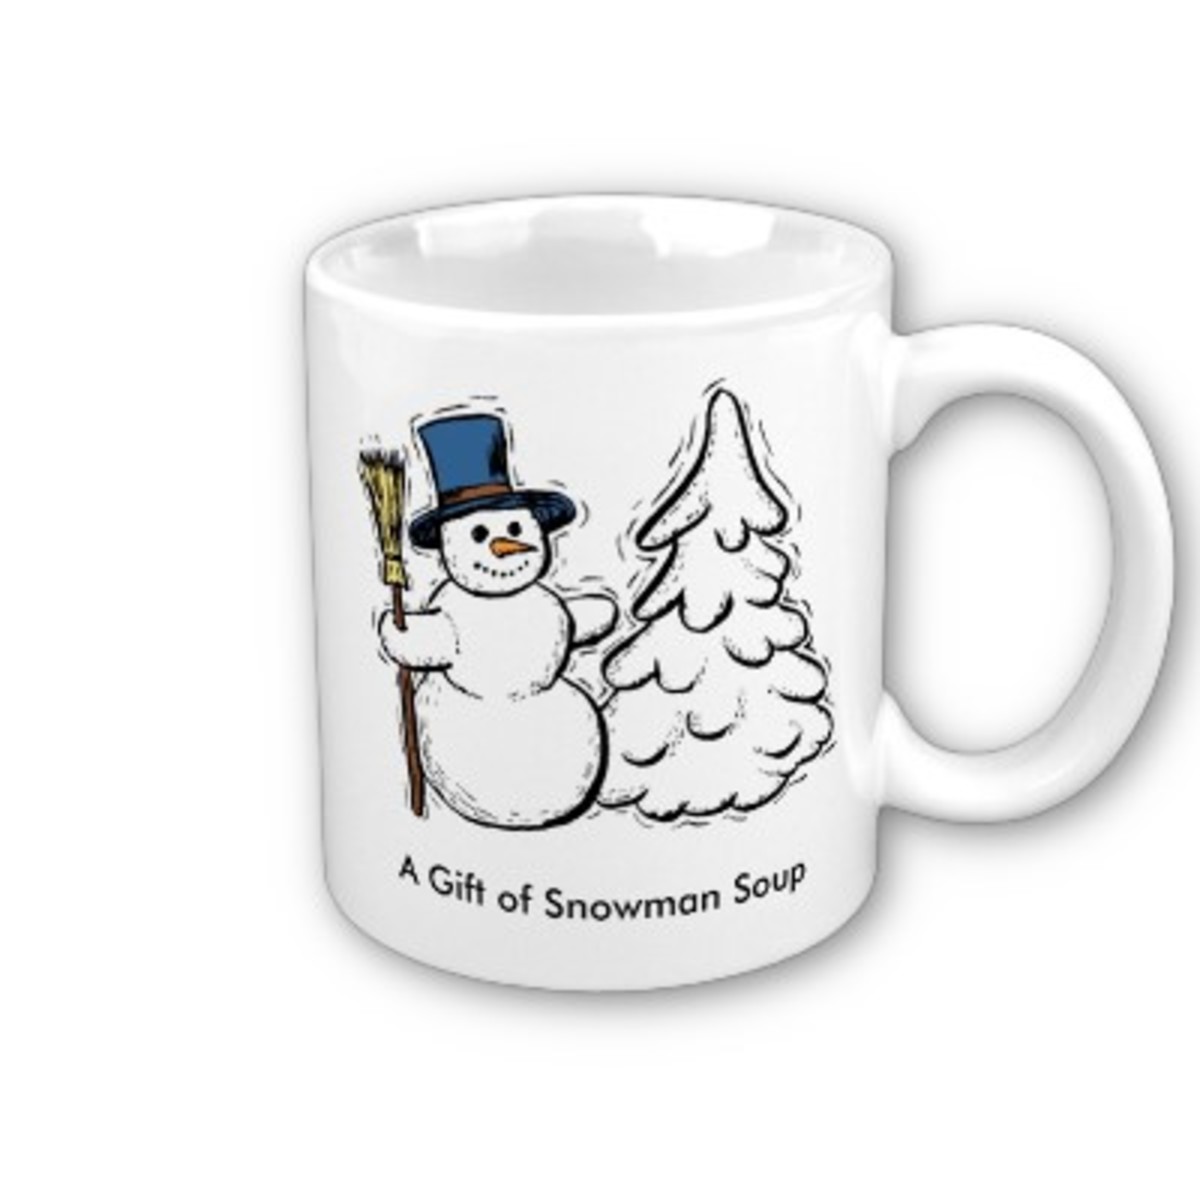 Another snowman soup mug